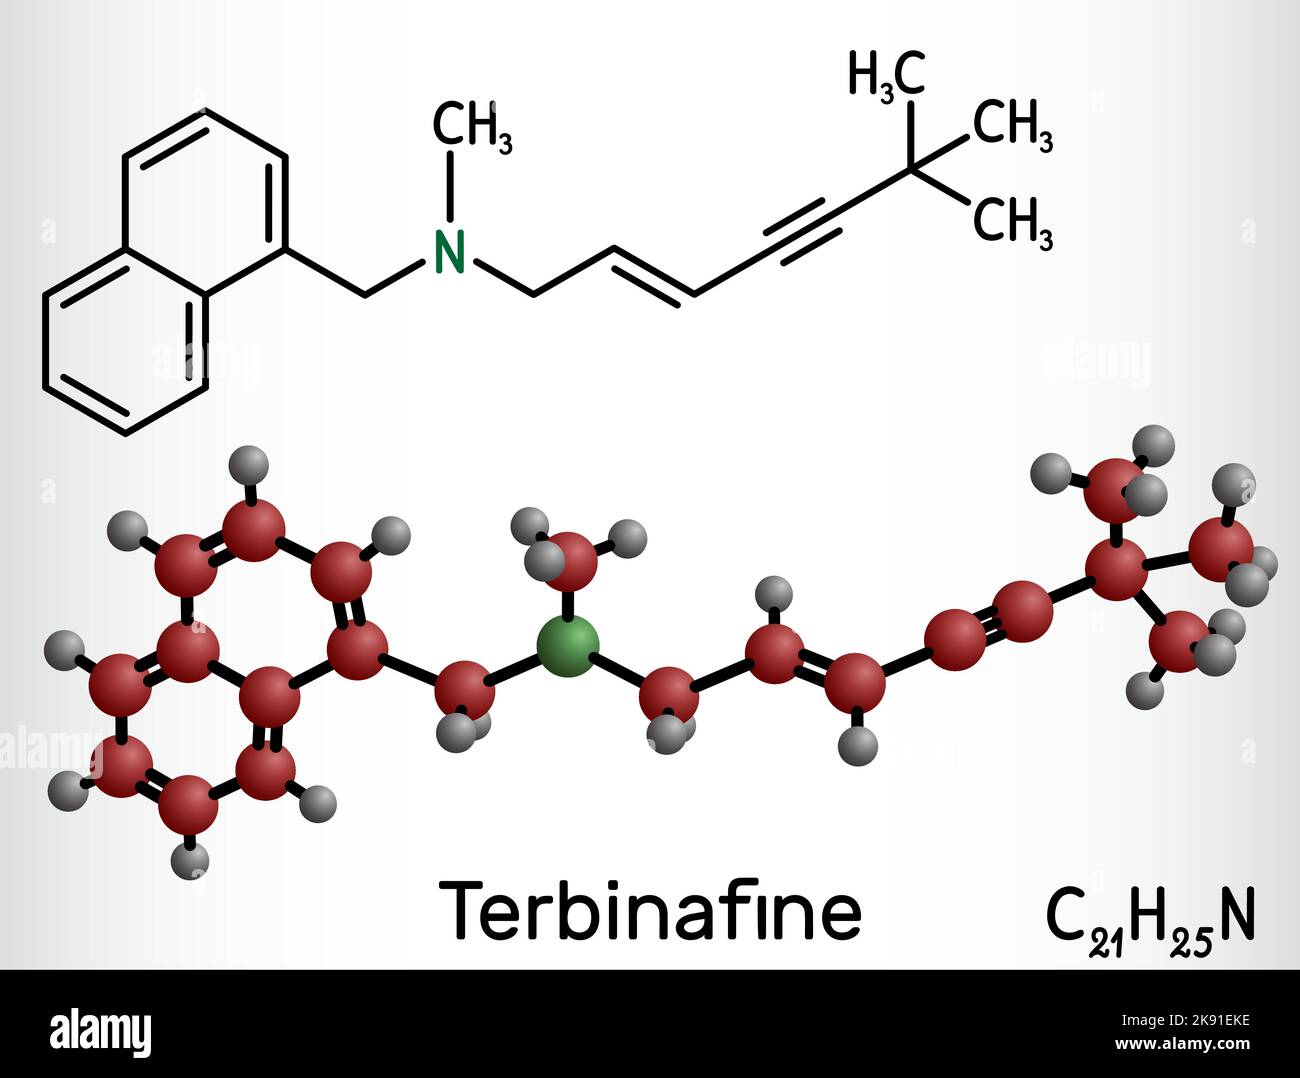 Terbinafin-Molekül. Strukturelle chemische Formel, Molekülmodell. Stock Vektor